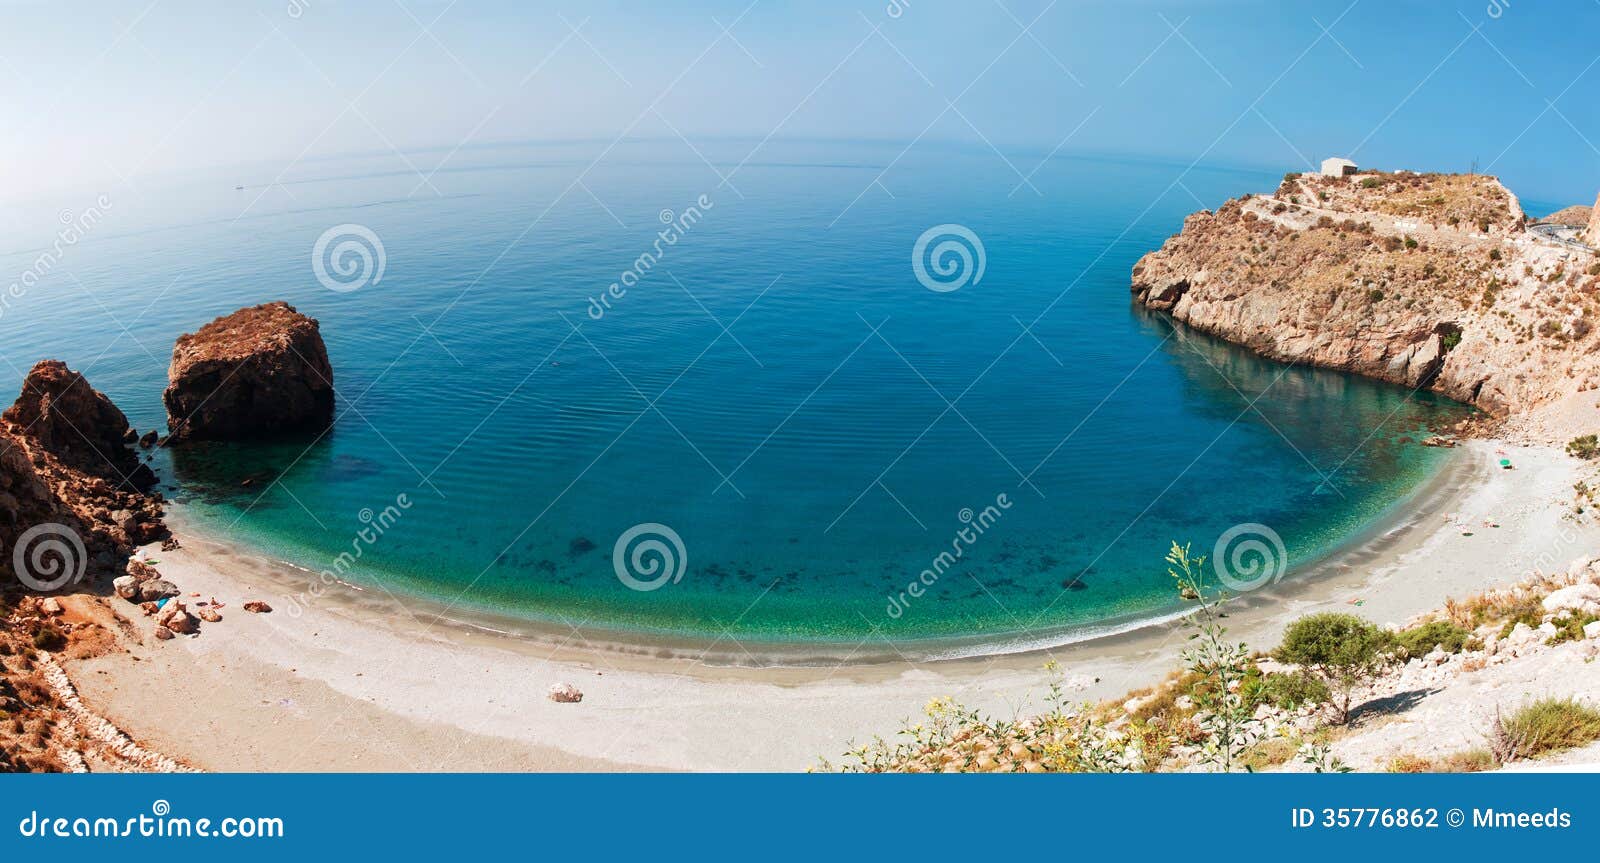 mediterranean coast, near town of calahonda, province of almeria, spain